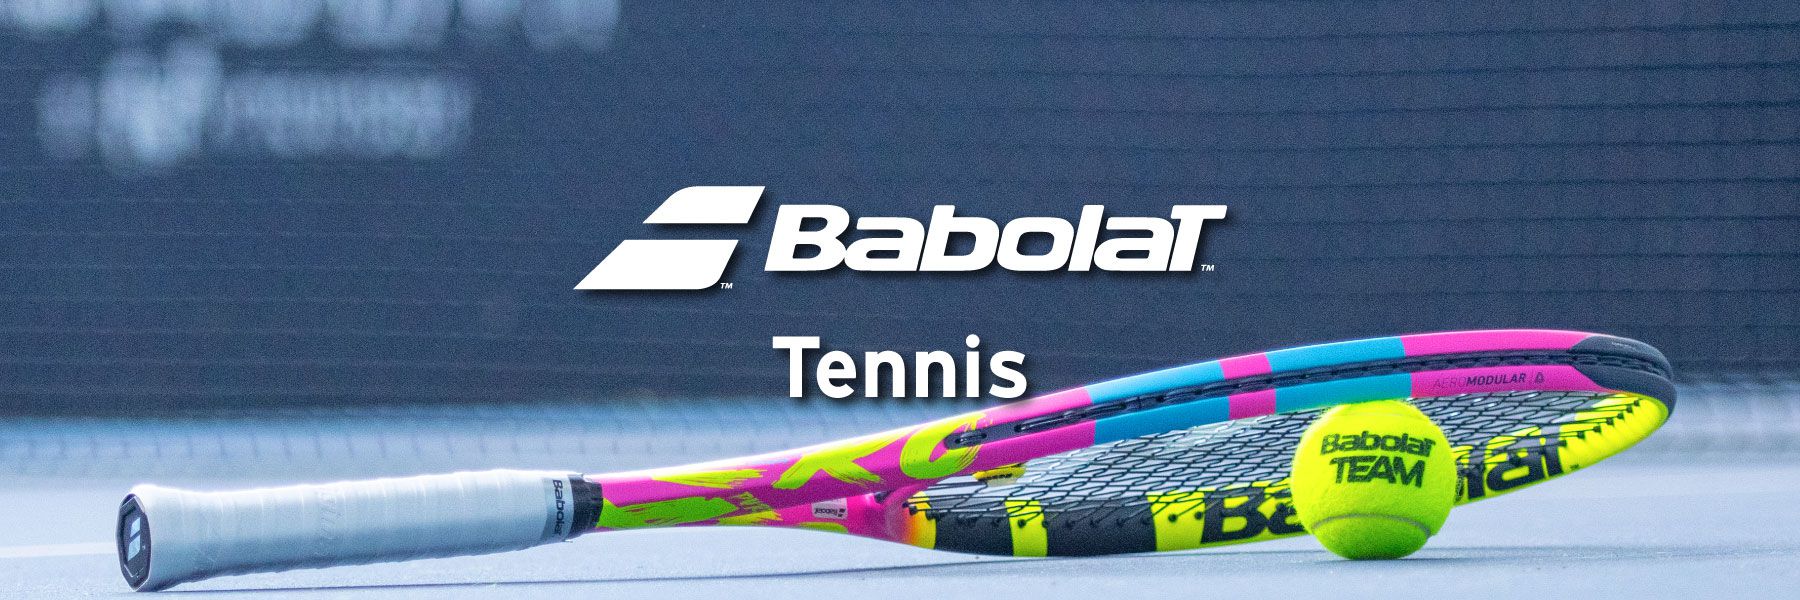 Babolat Tennis